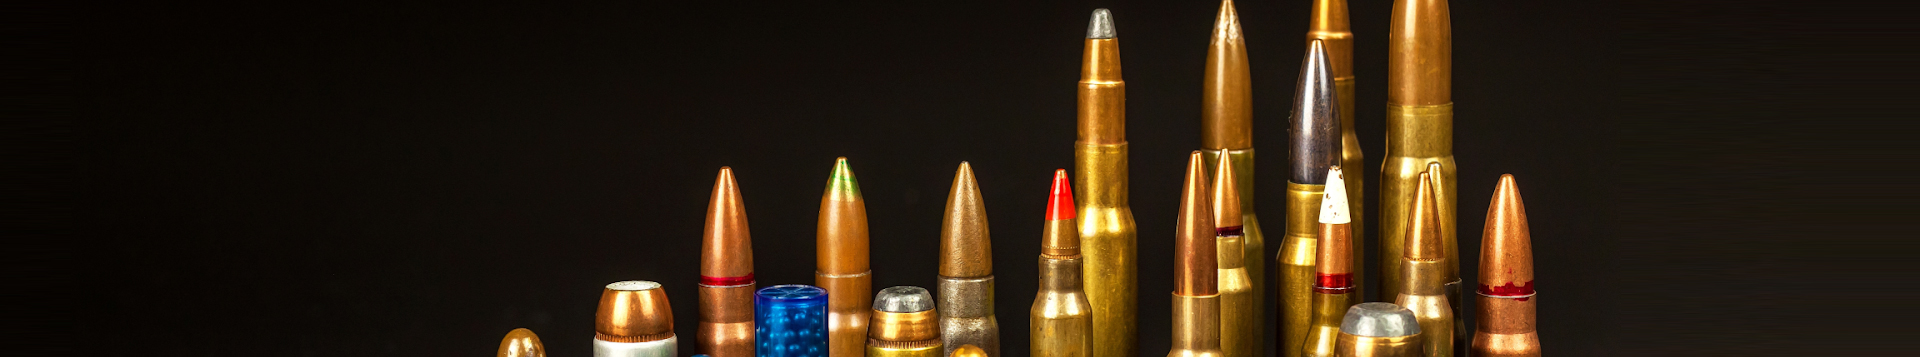 9mm Ammo | 9mm Ammo Deals | Bulk 9mm Ammunition From Top Retailers.